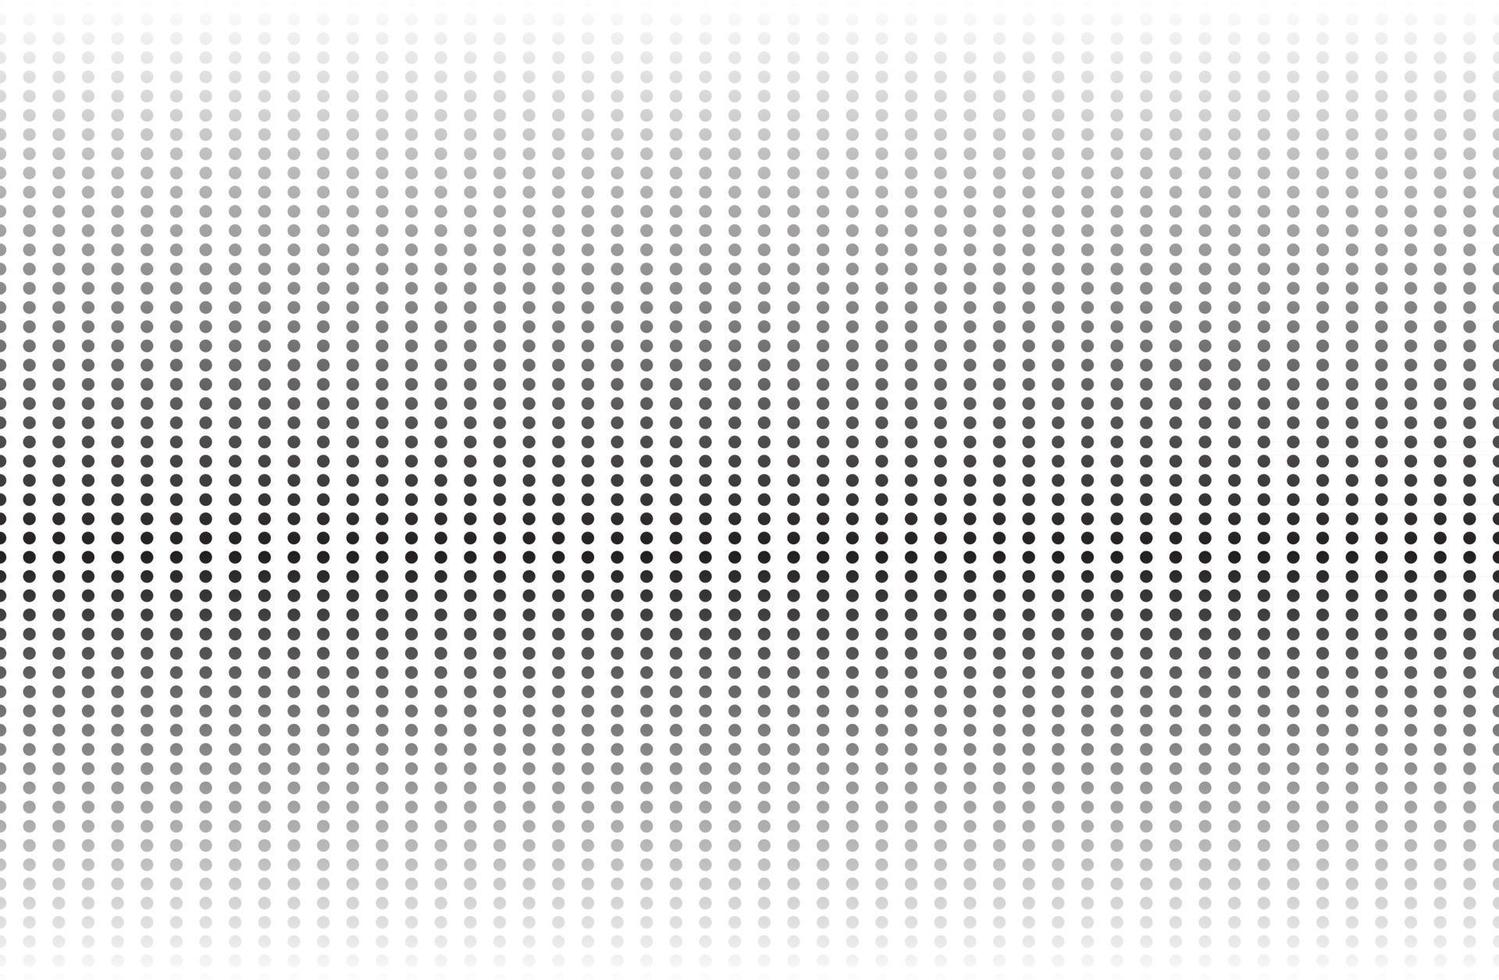 Polka dot pattern background vector